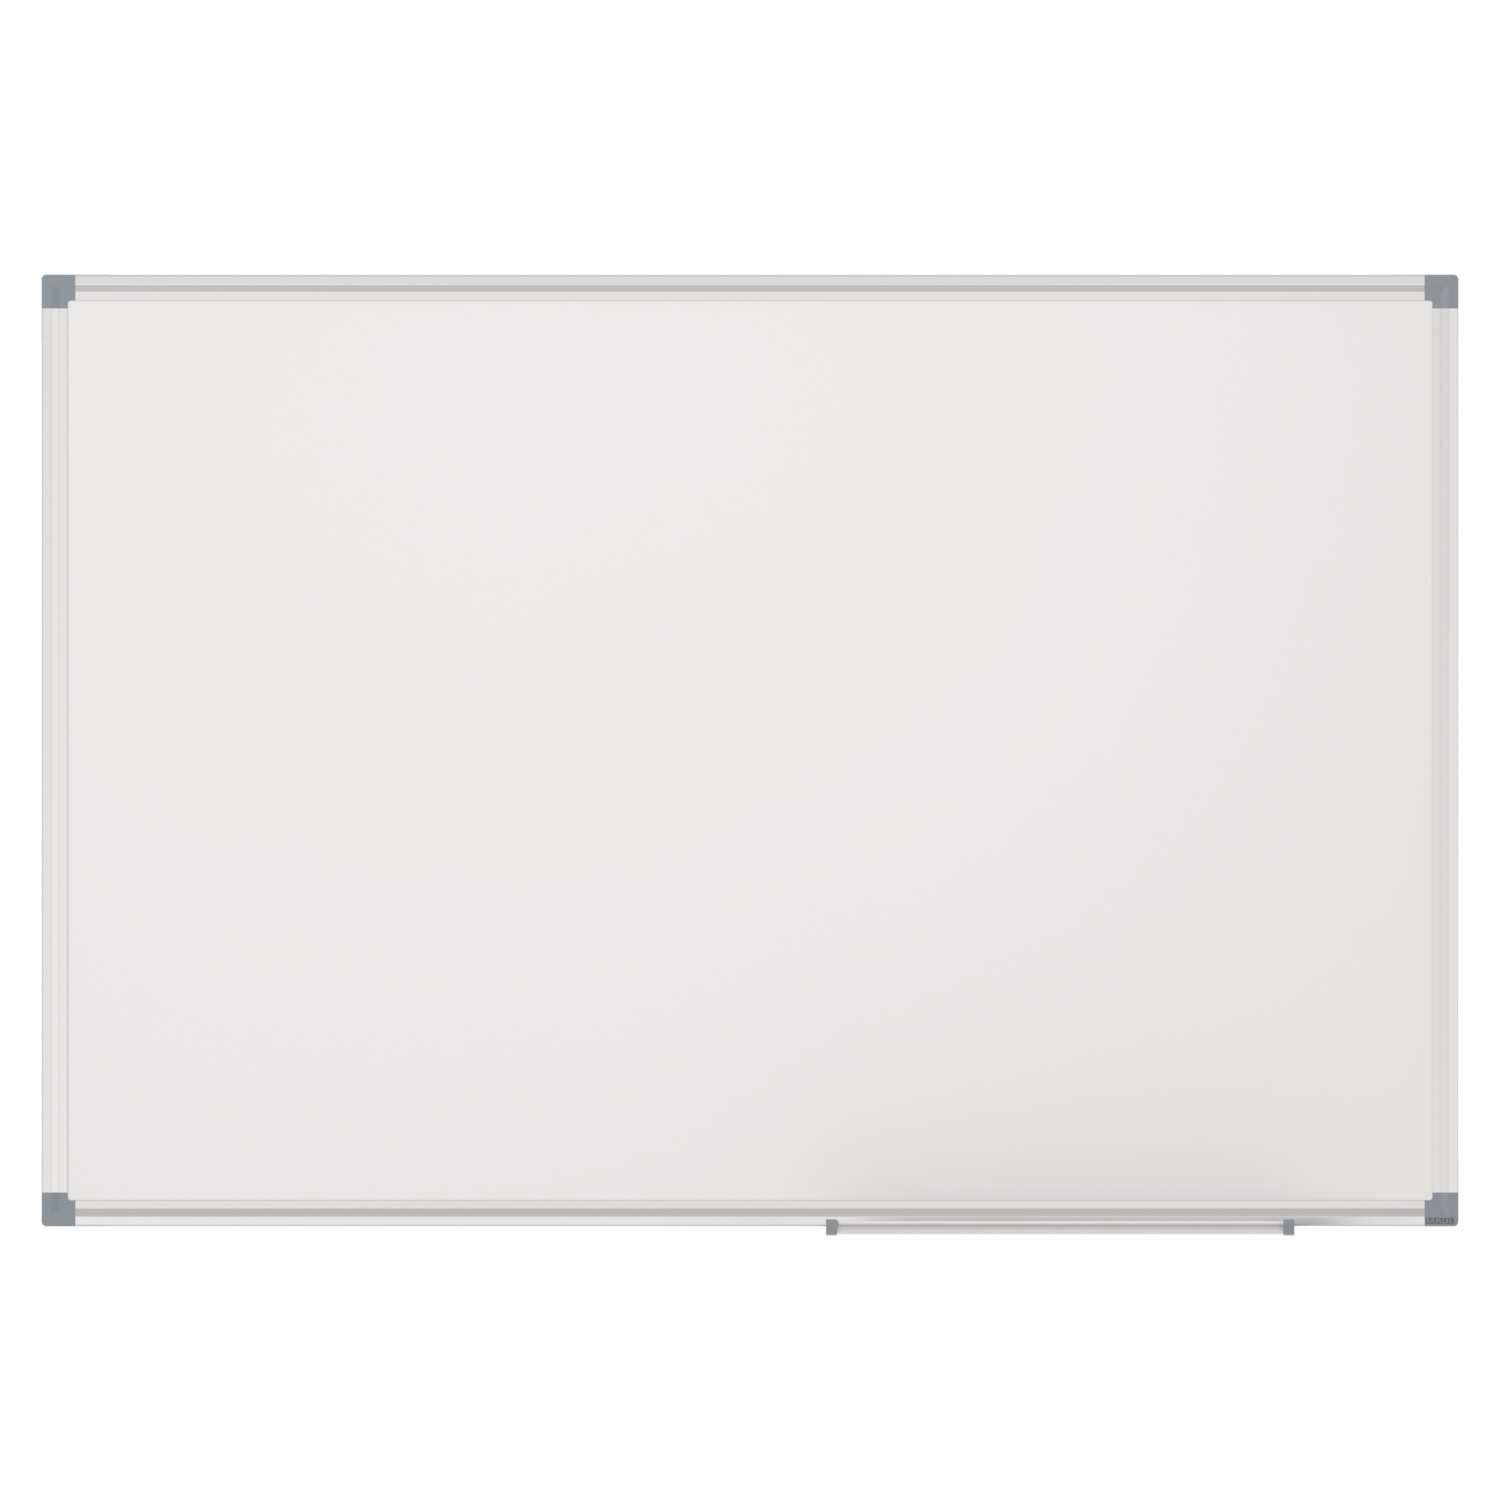 Whiteboard MAULstandard, 100x150 cm